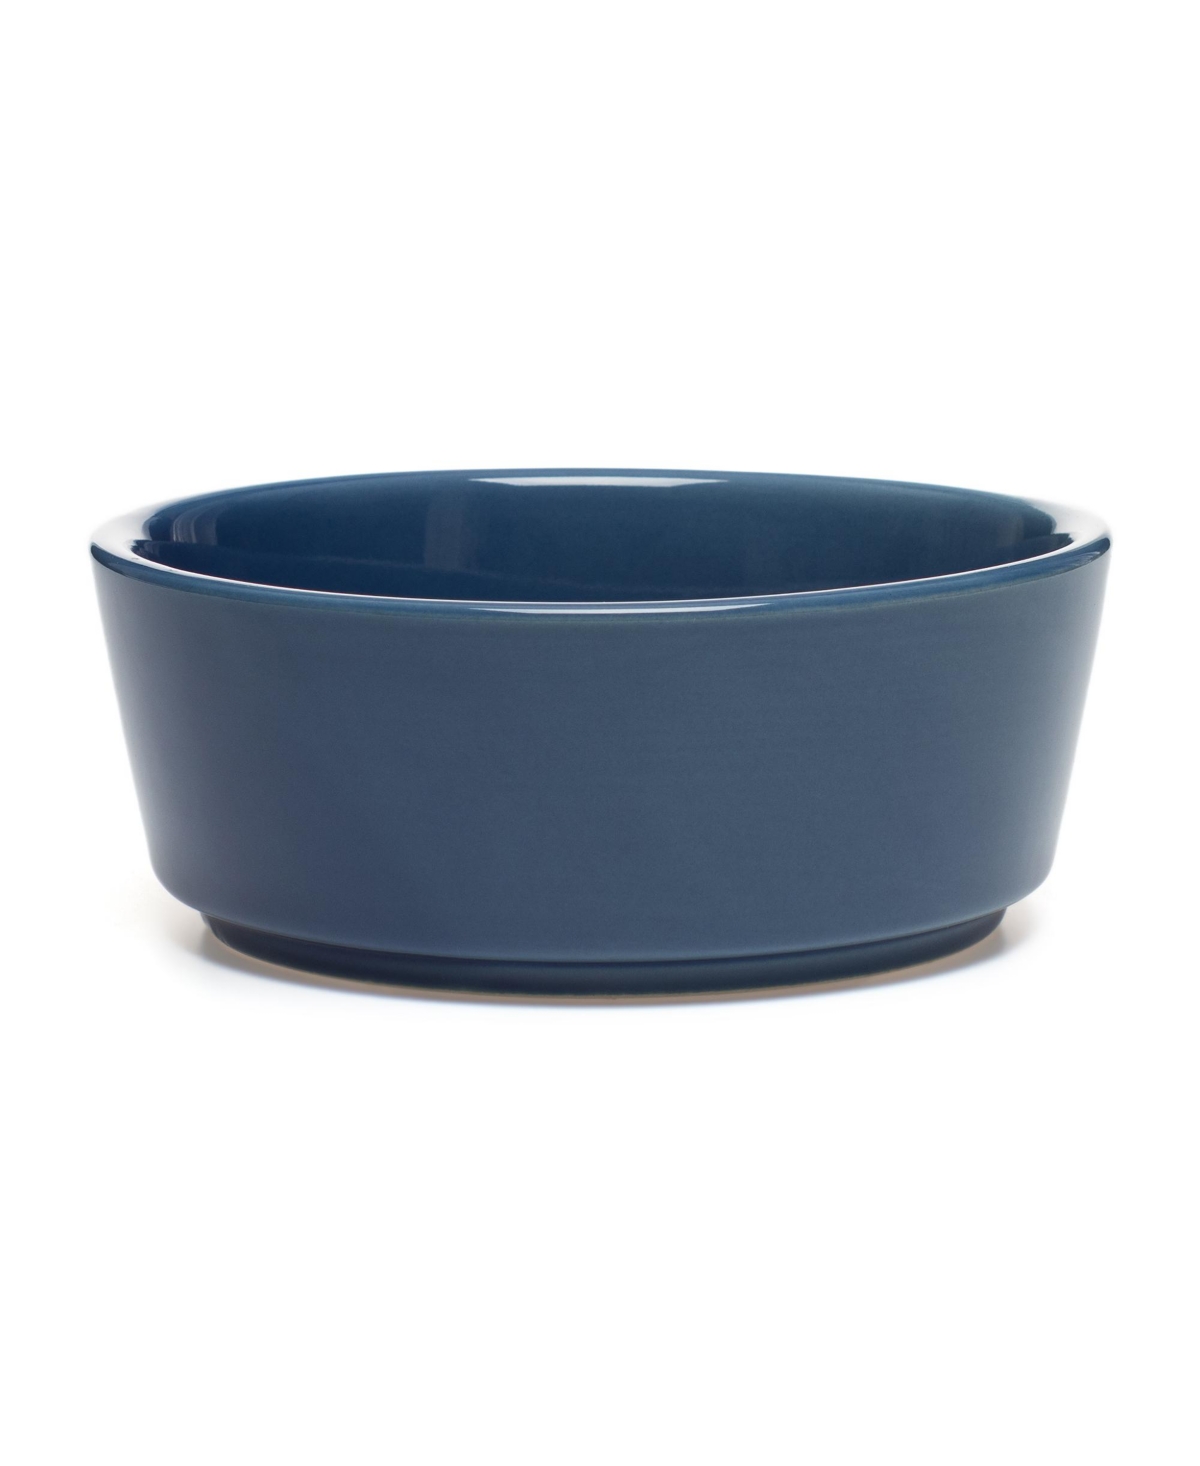 Dog Simple Solid Bowl Royal Blue - Medium - Royal Blue